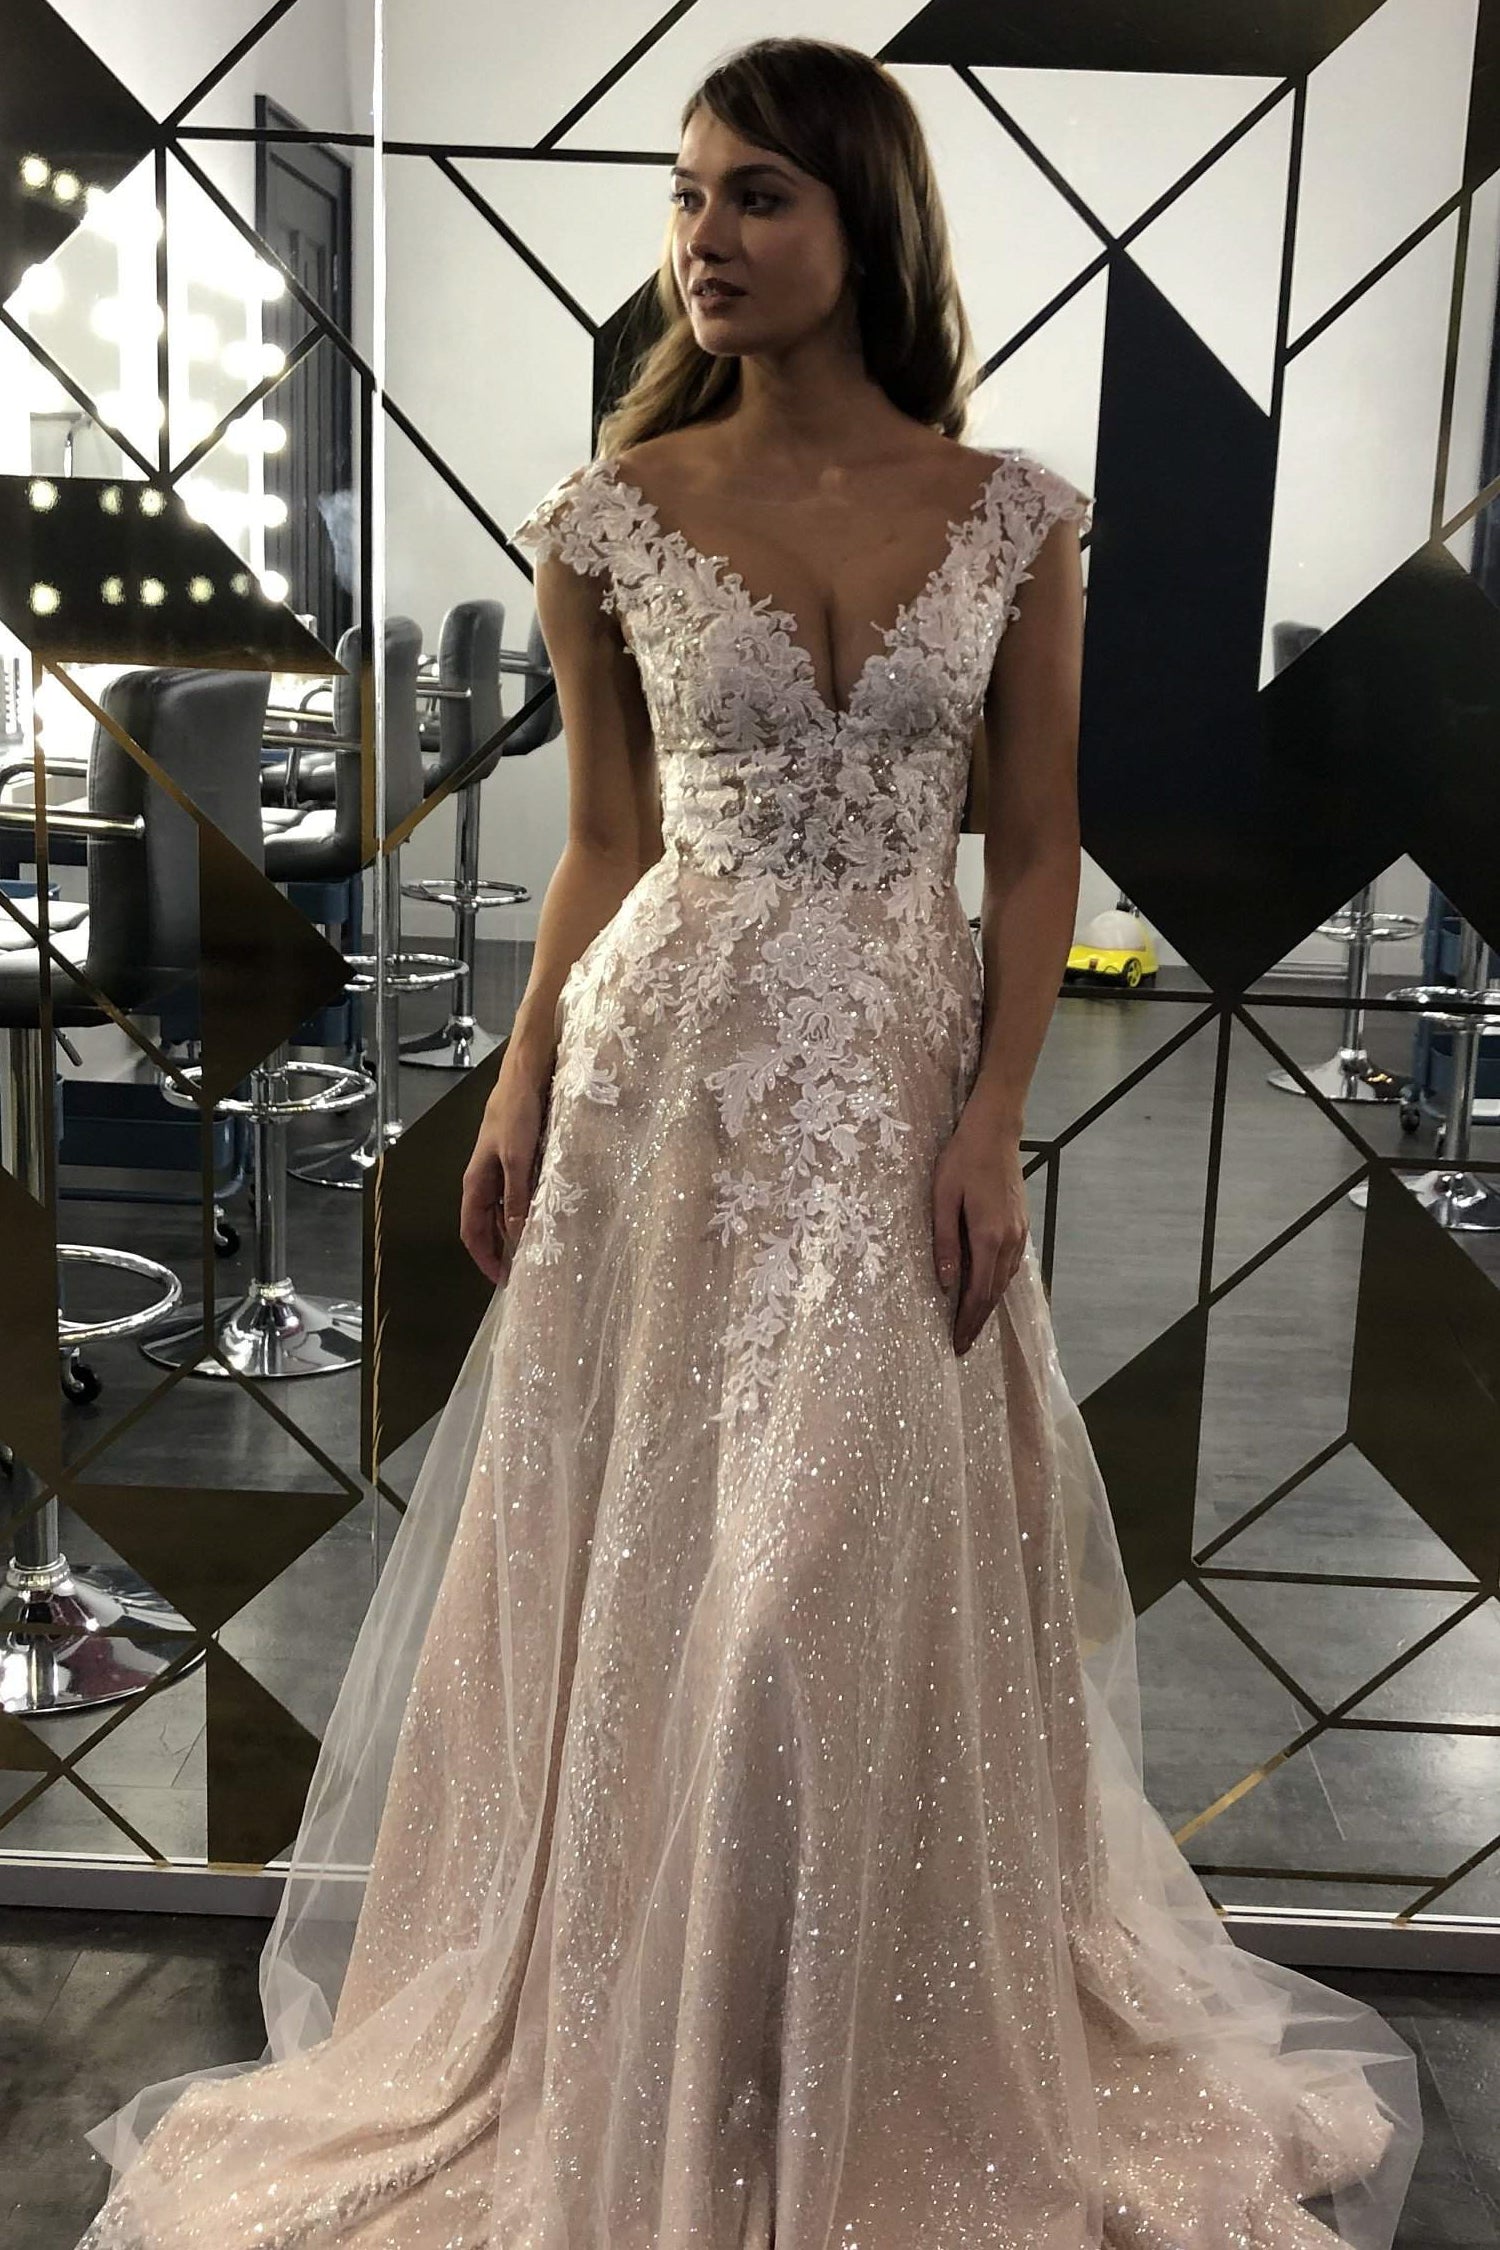 The Bridal Bra™ Infinity Dress